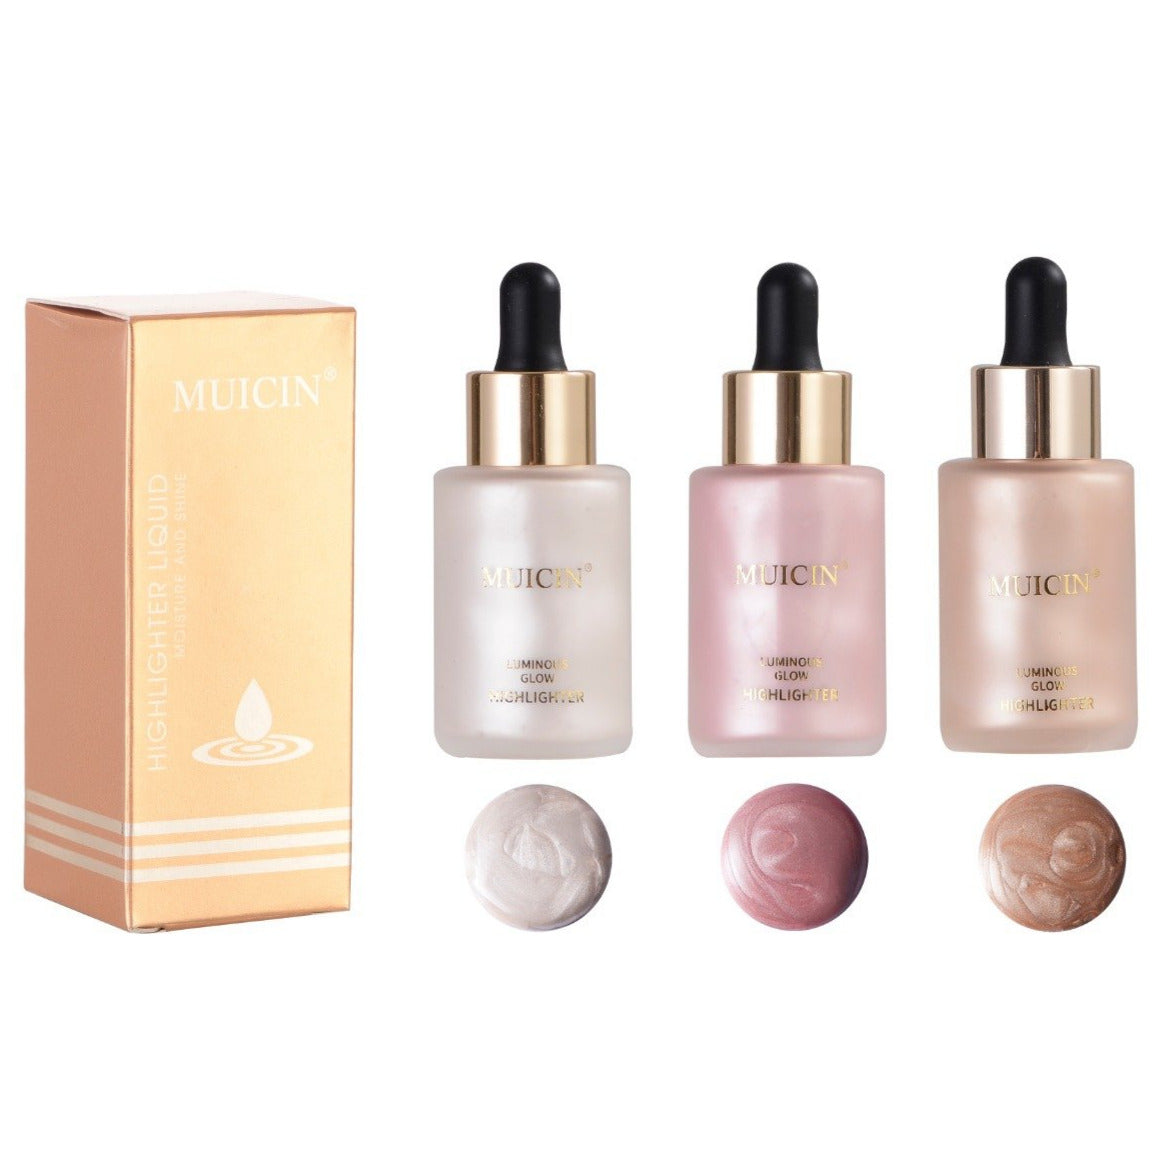 Buy  MUICIN - Liquid Highlighter Moisture & Shine - at Best Price Online in Pakistan